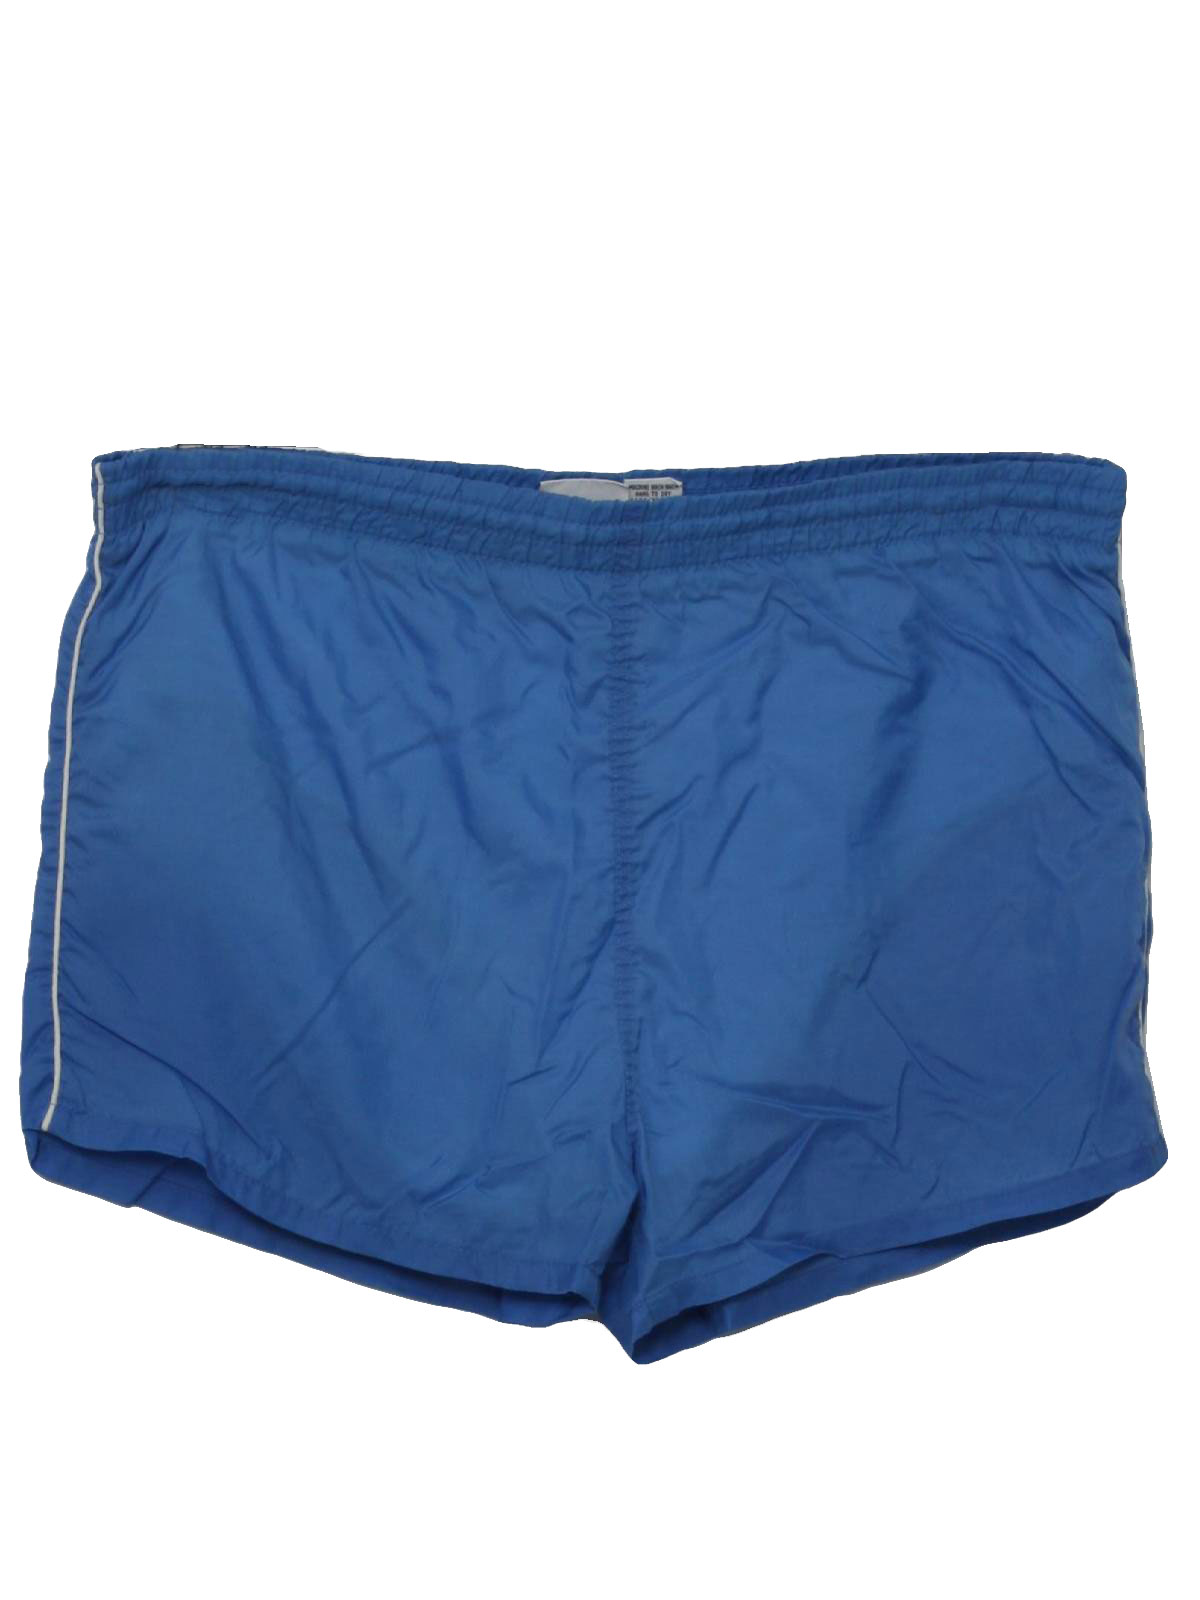 1980s Vintage Swimsuit/Swimwear: 80s -Ocean Side- Mens blue nylon with ...